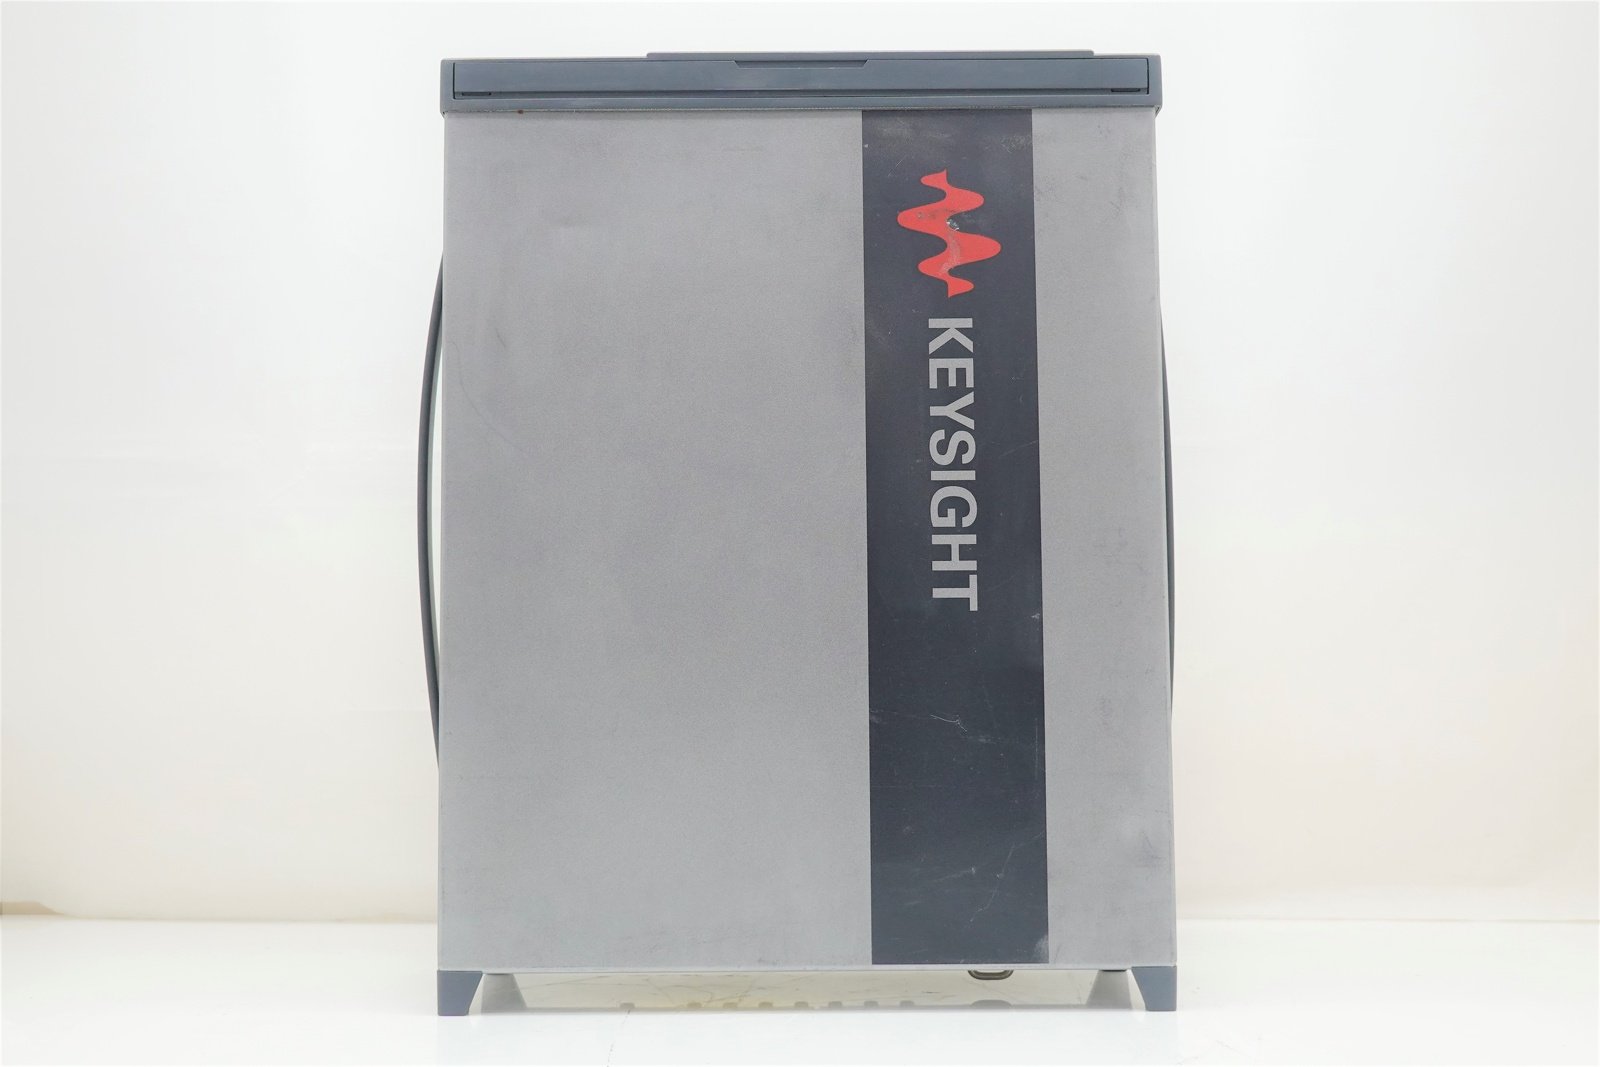 Keysight N9021B-550 10 Hz to 50 GHz